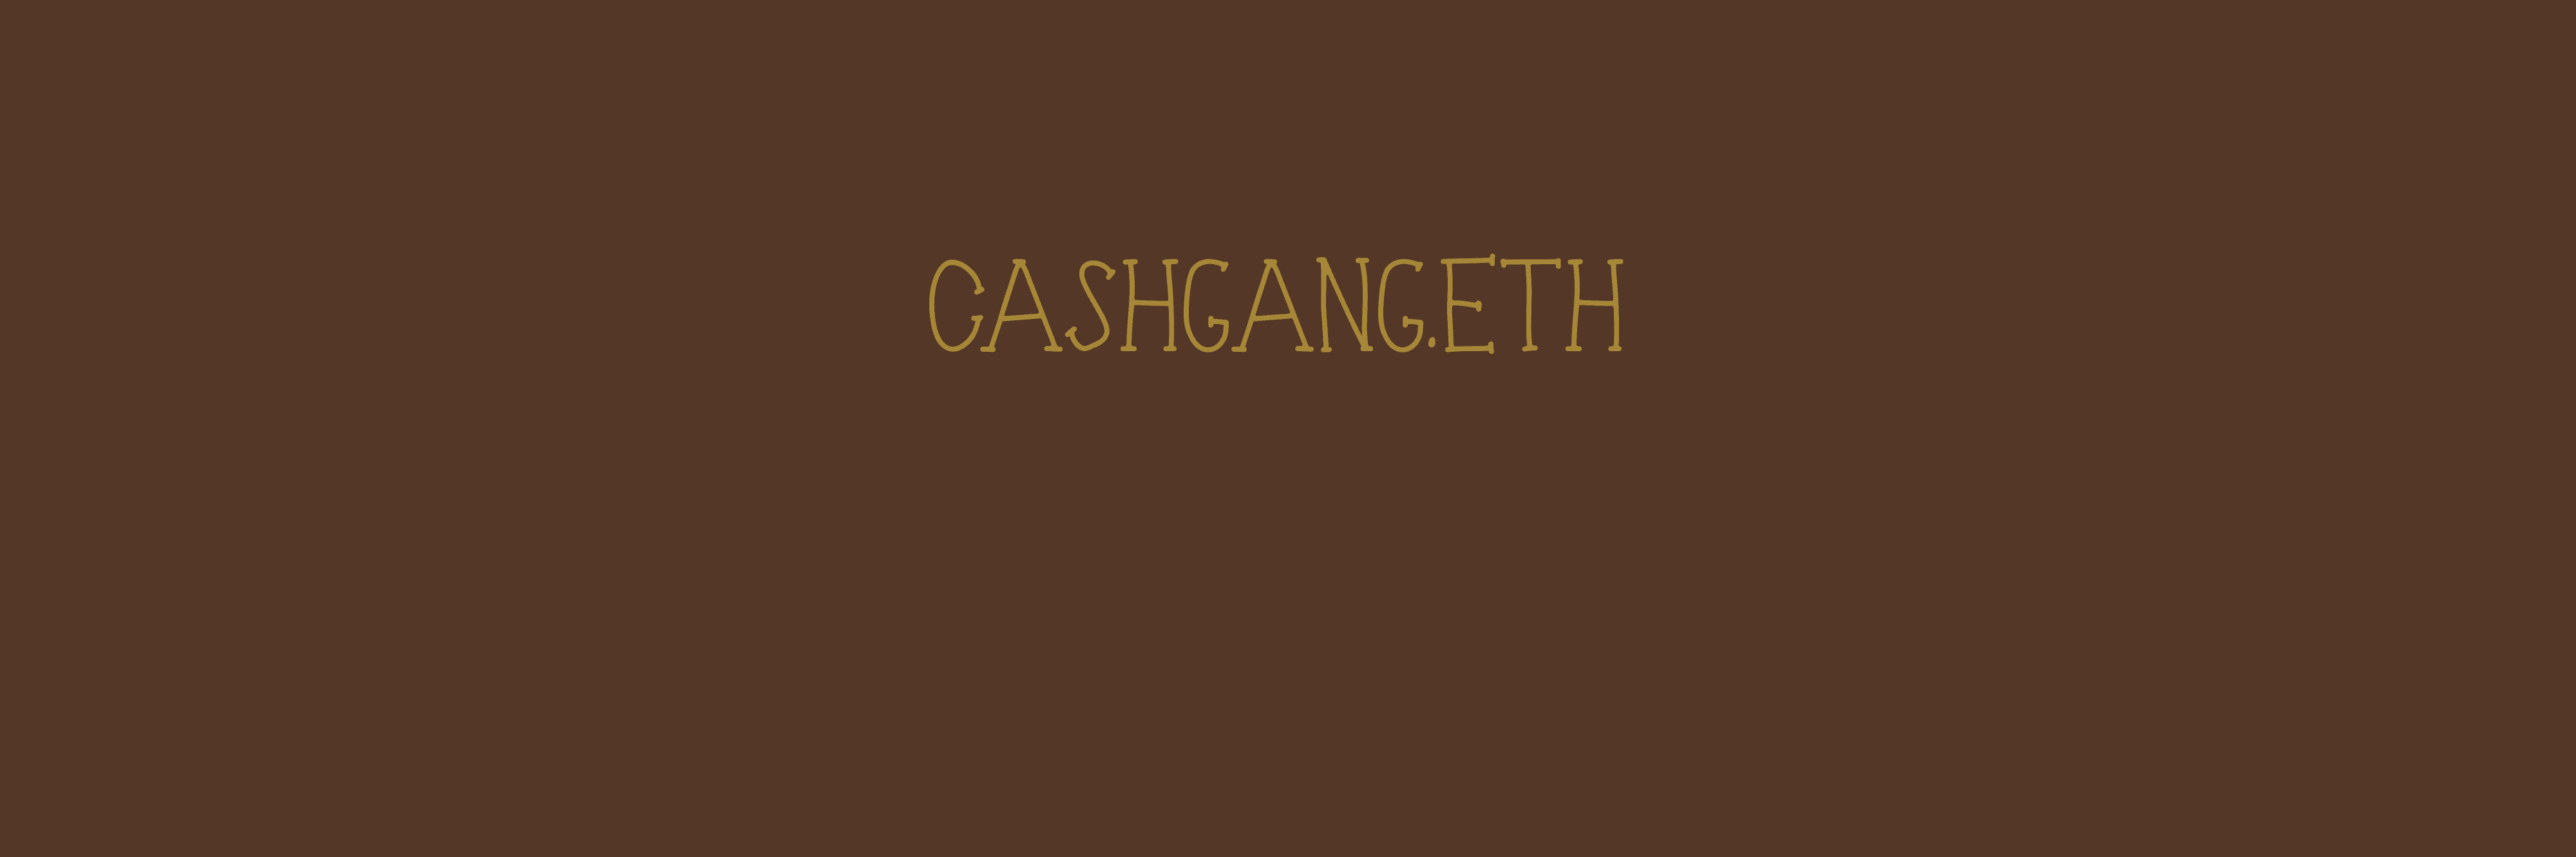 cashgang-eth 横幅